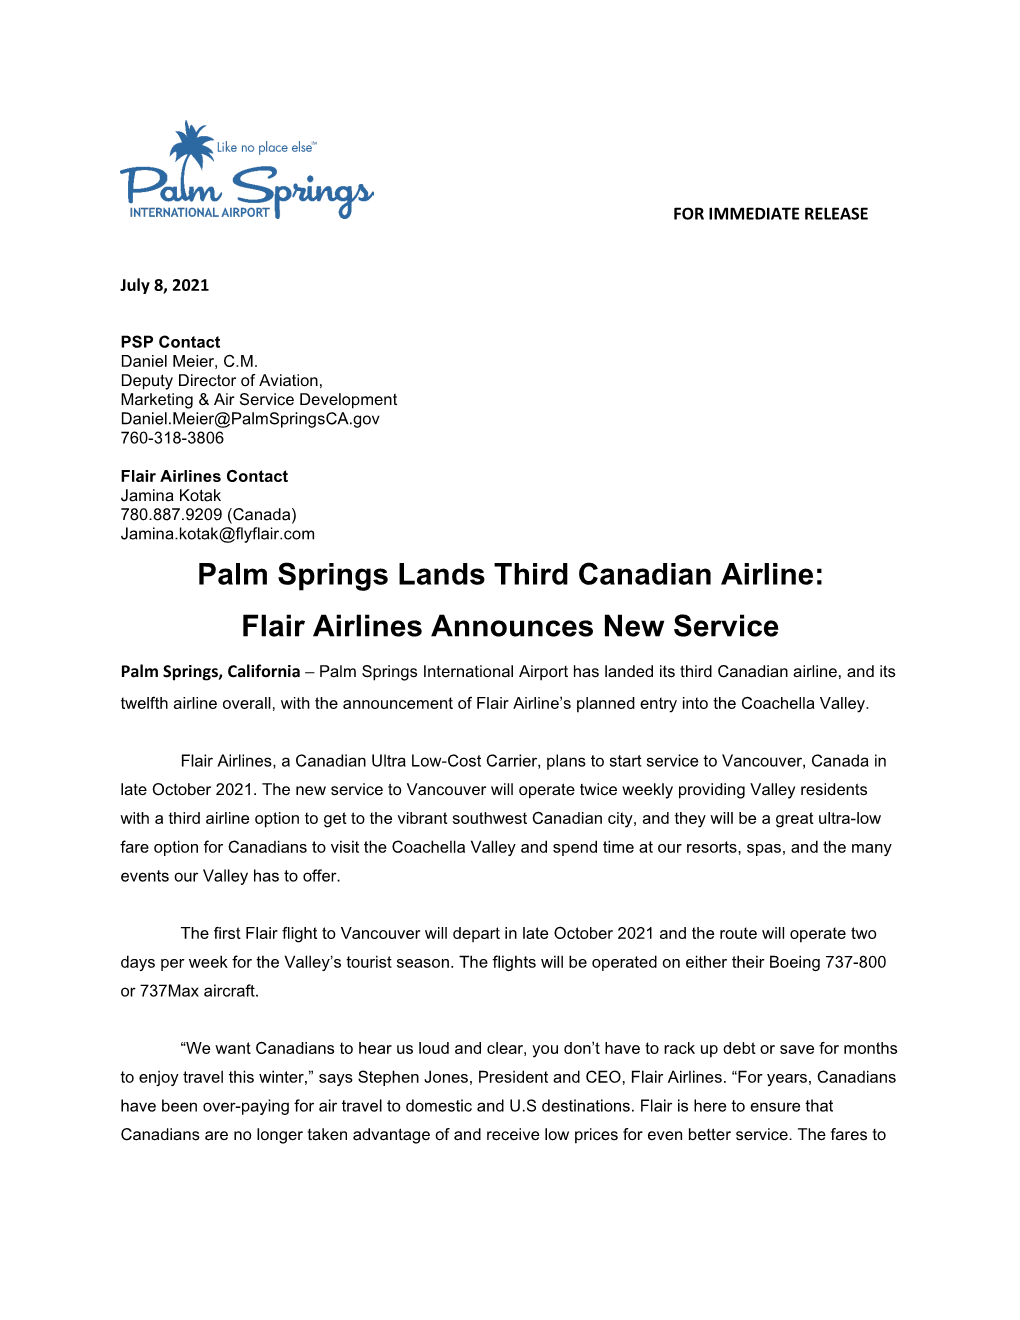 Flair Airlines Announces New Seasonal